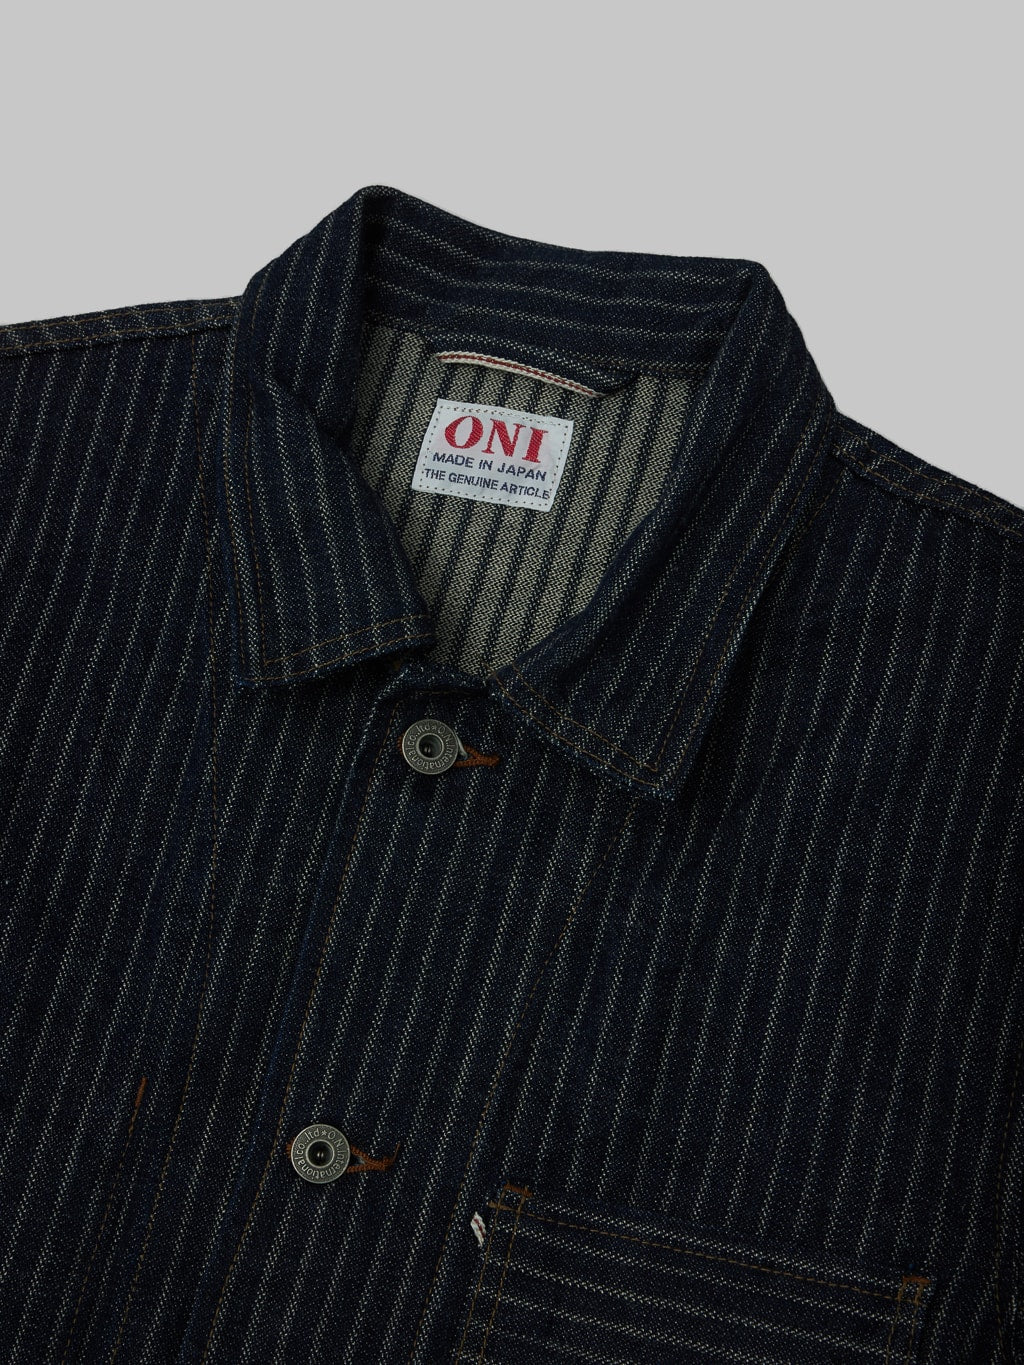 ONI Denim HJS Drop Needle Stitching Jacquard Striped Coverall collar